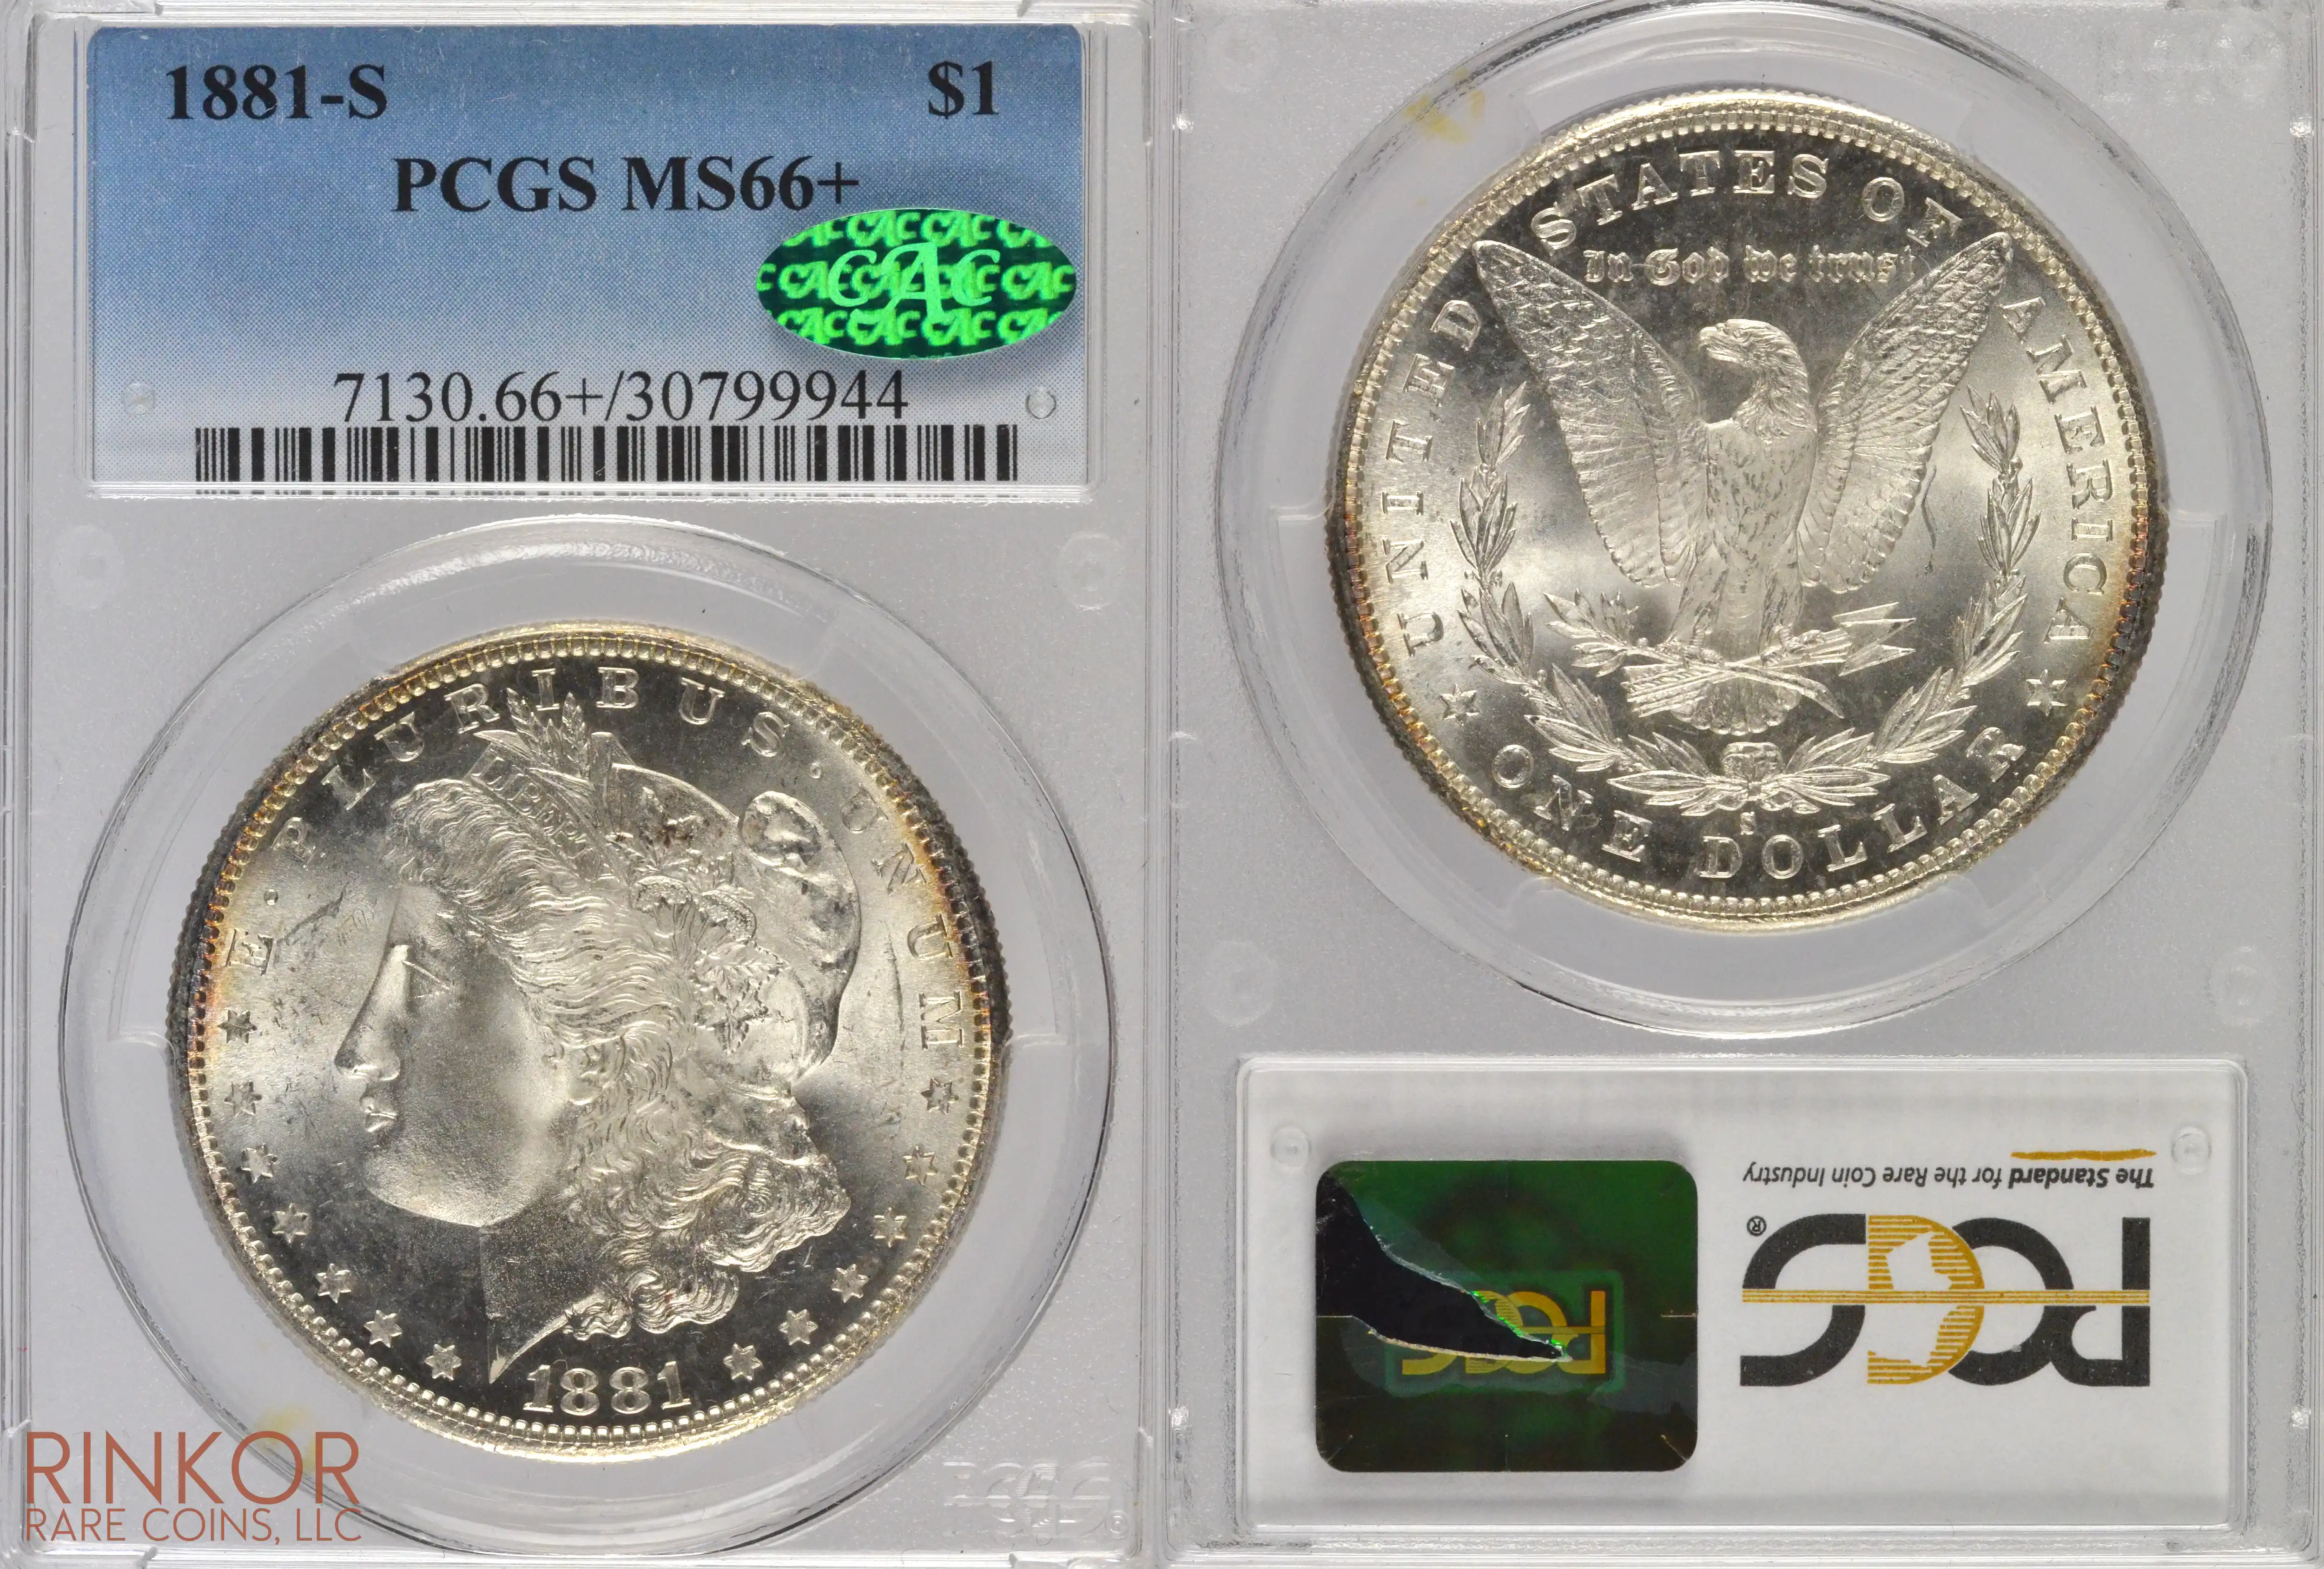 1881-S $1 PCGS MS 66+ CAC